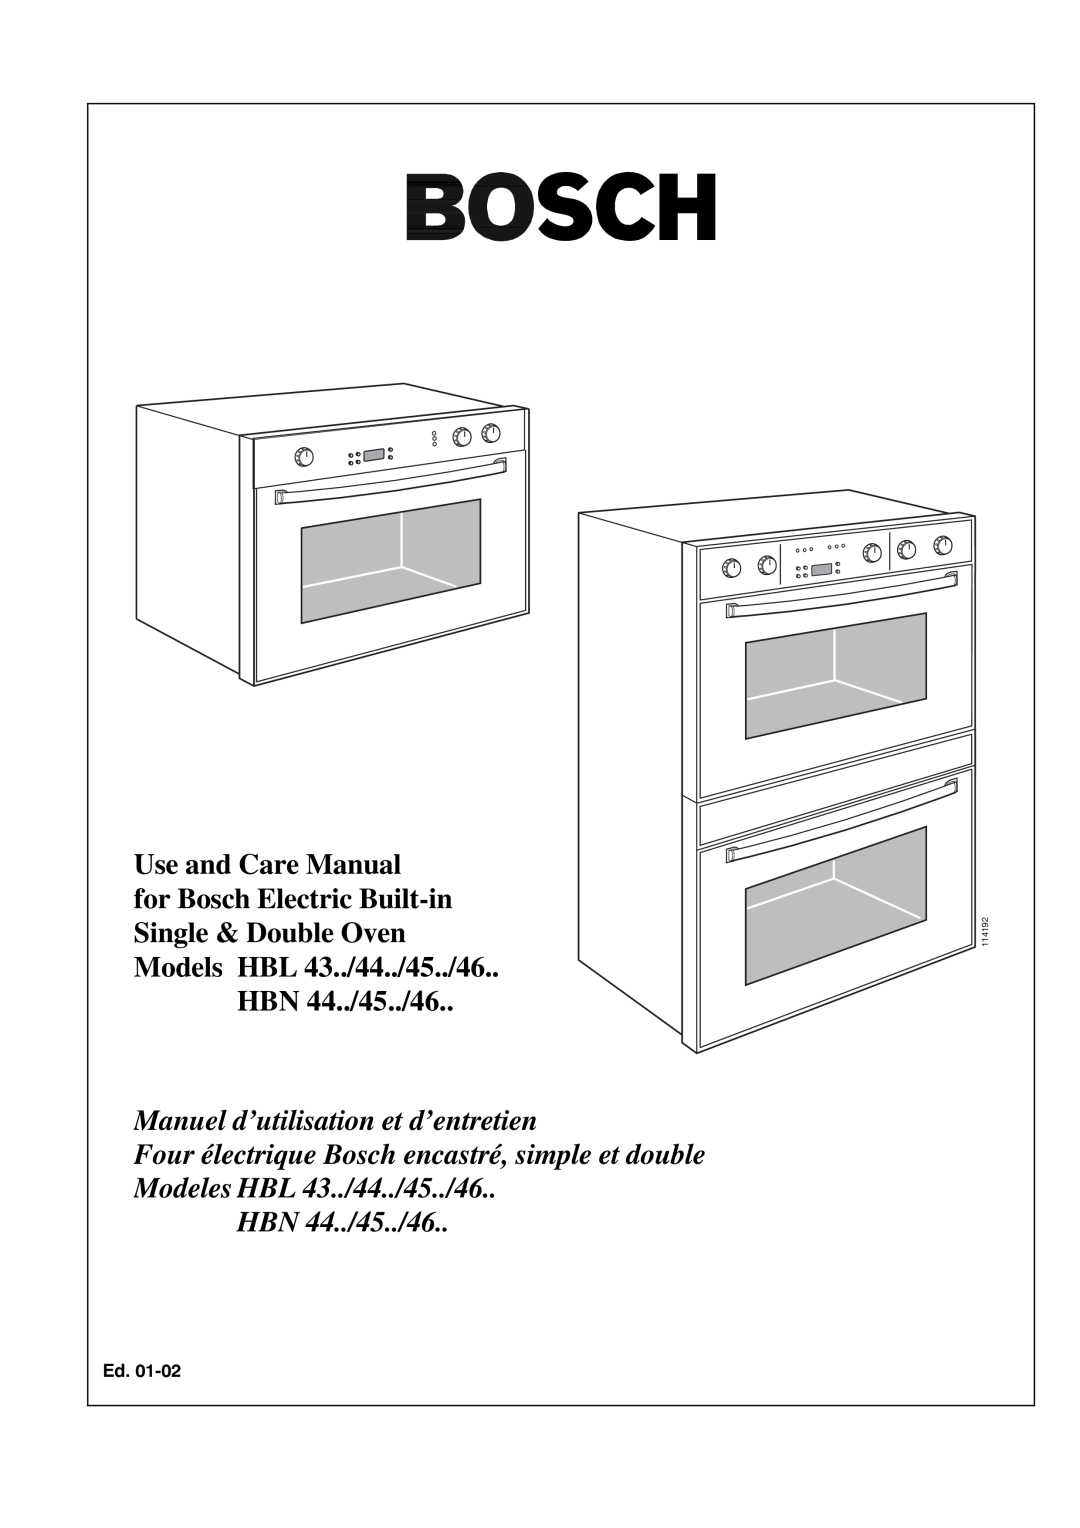 Bosch Appliances HBN 46 manuel dutilisation Use and Care Manual, HBN 44../45../46, Manuel d’utilisation et d’entretien 